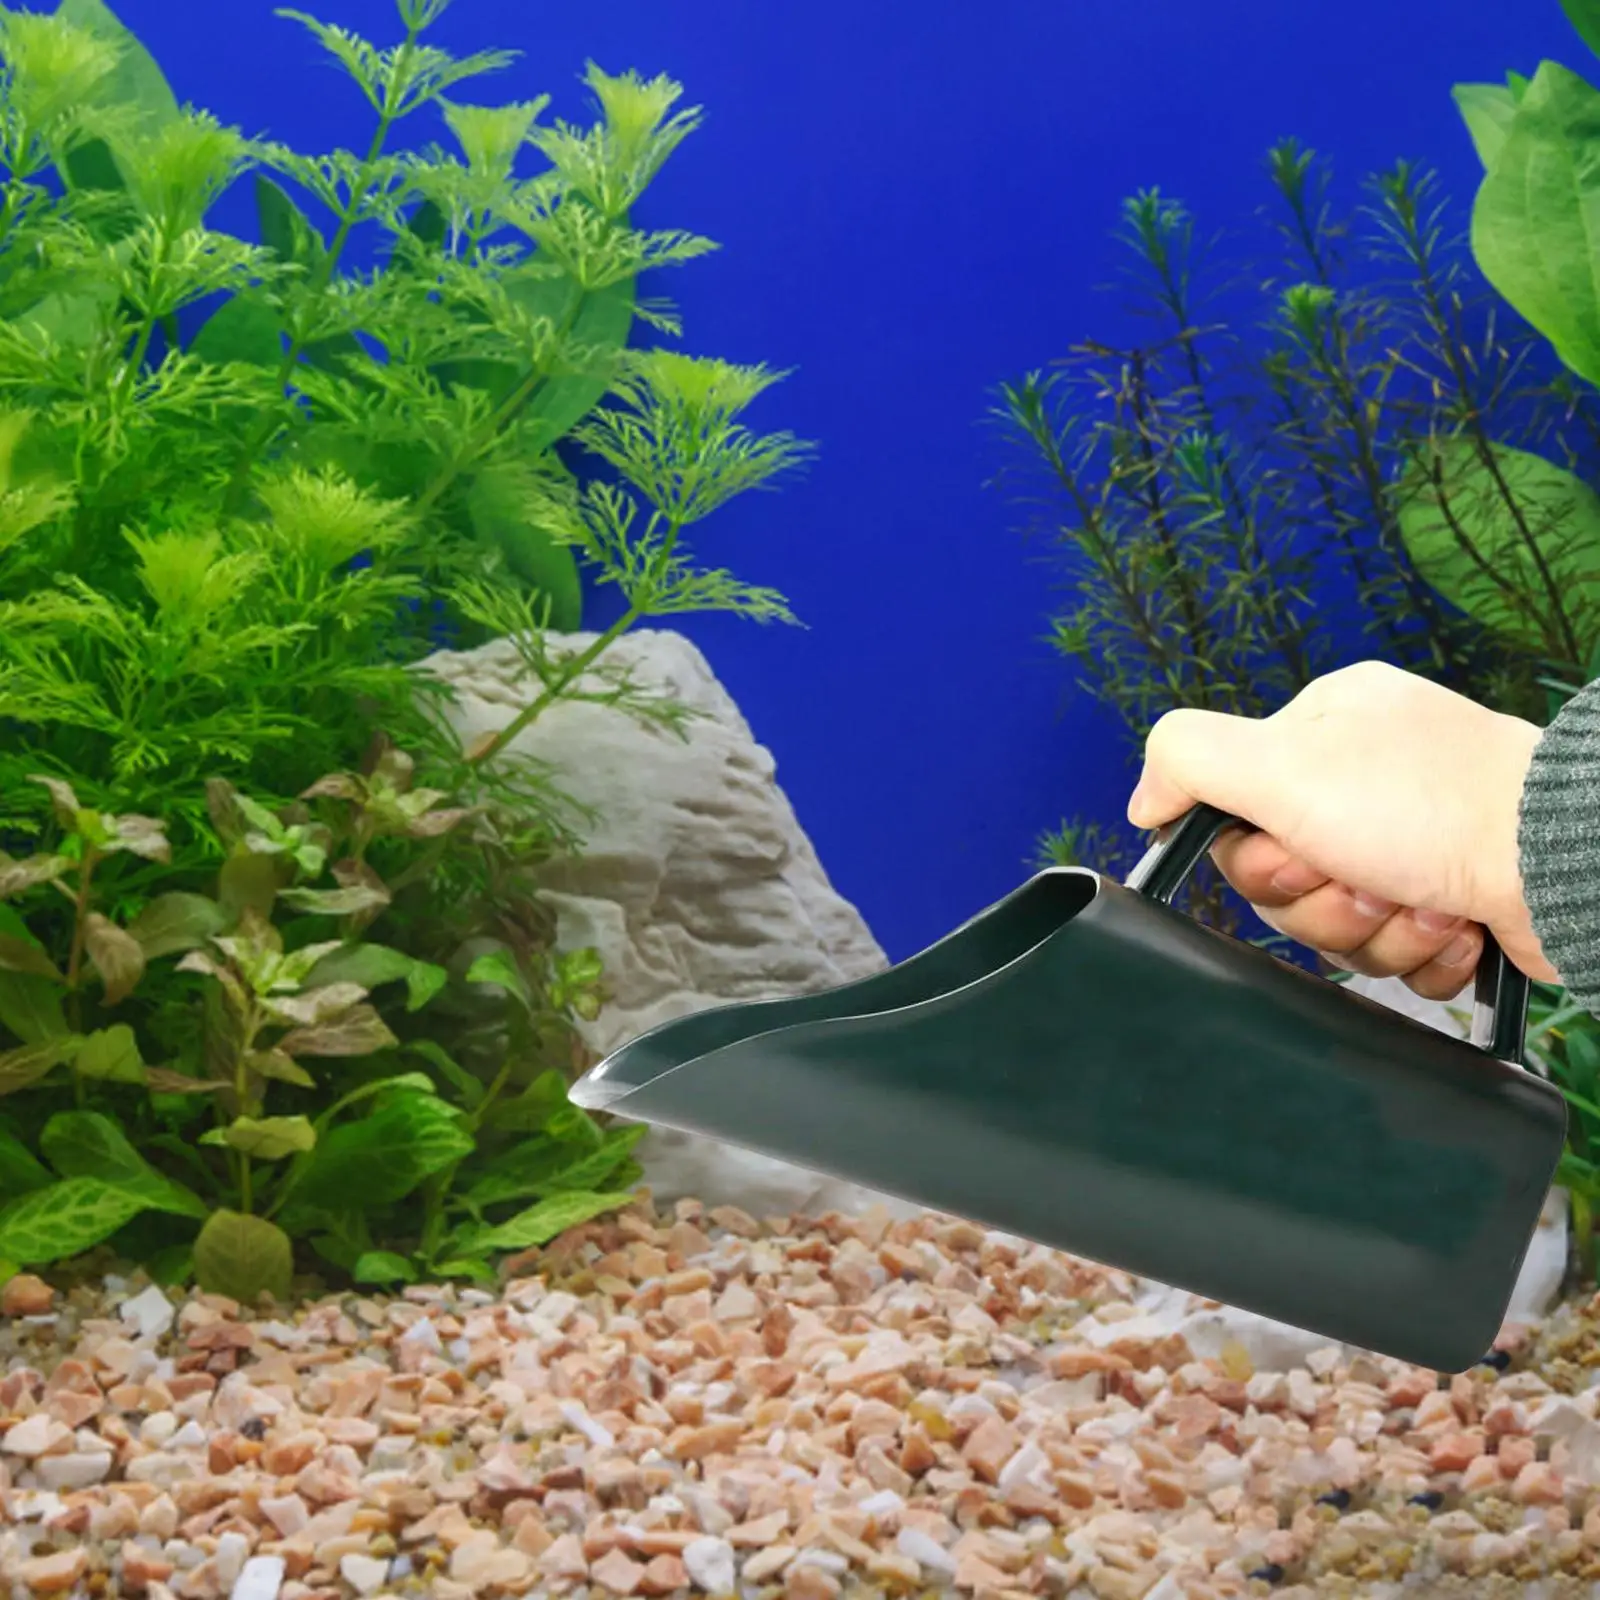 Multifunctional Garden Bucket Shovel Wear Resistant Reusable for Weeding